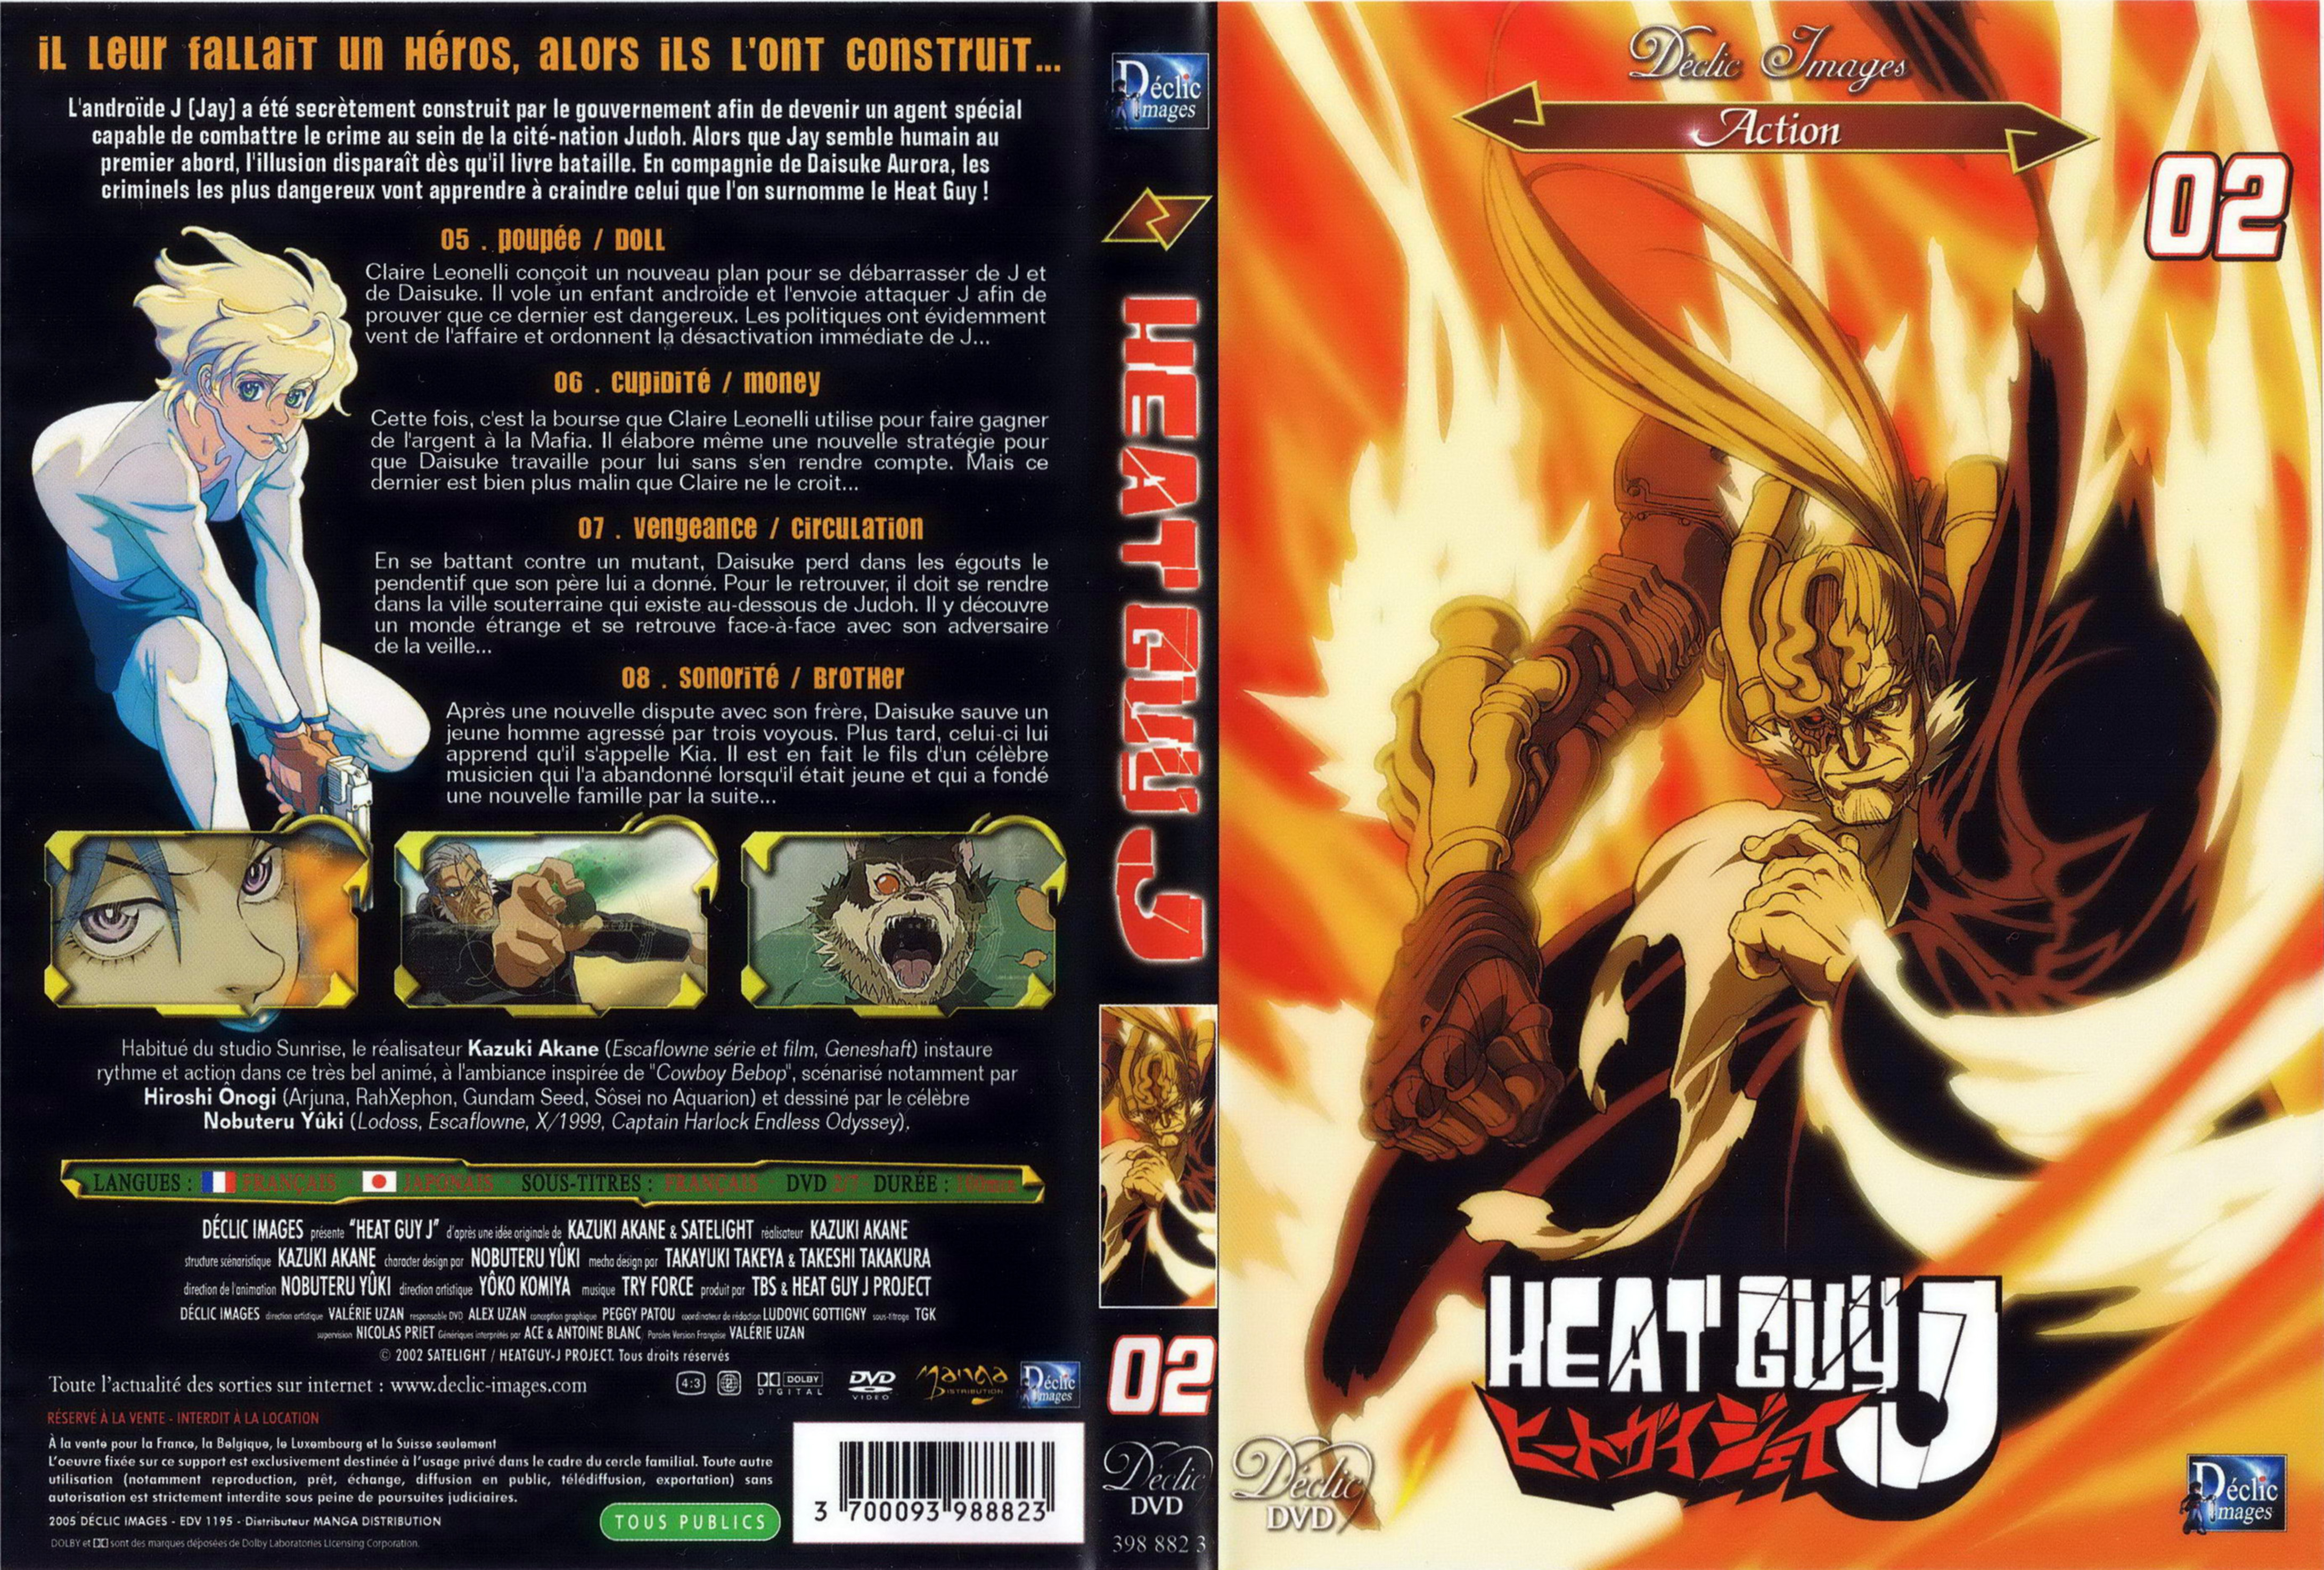 Jaquette DVD Heat guy J vol 02